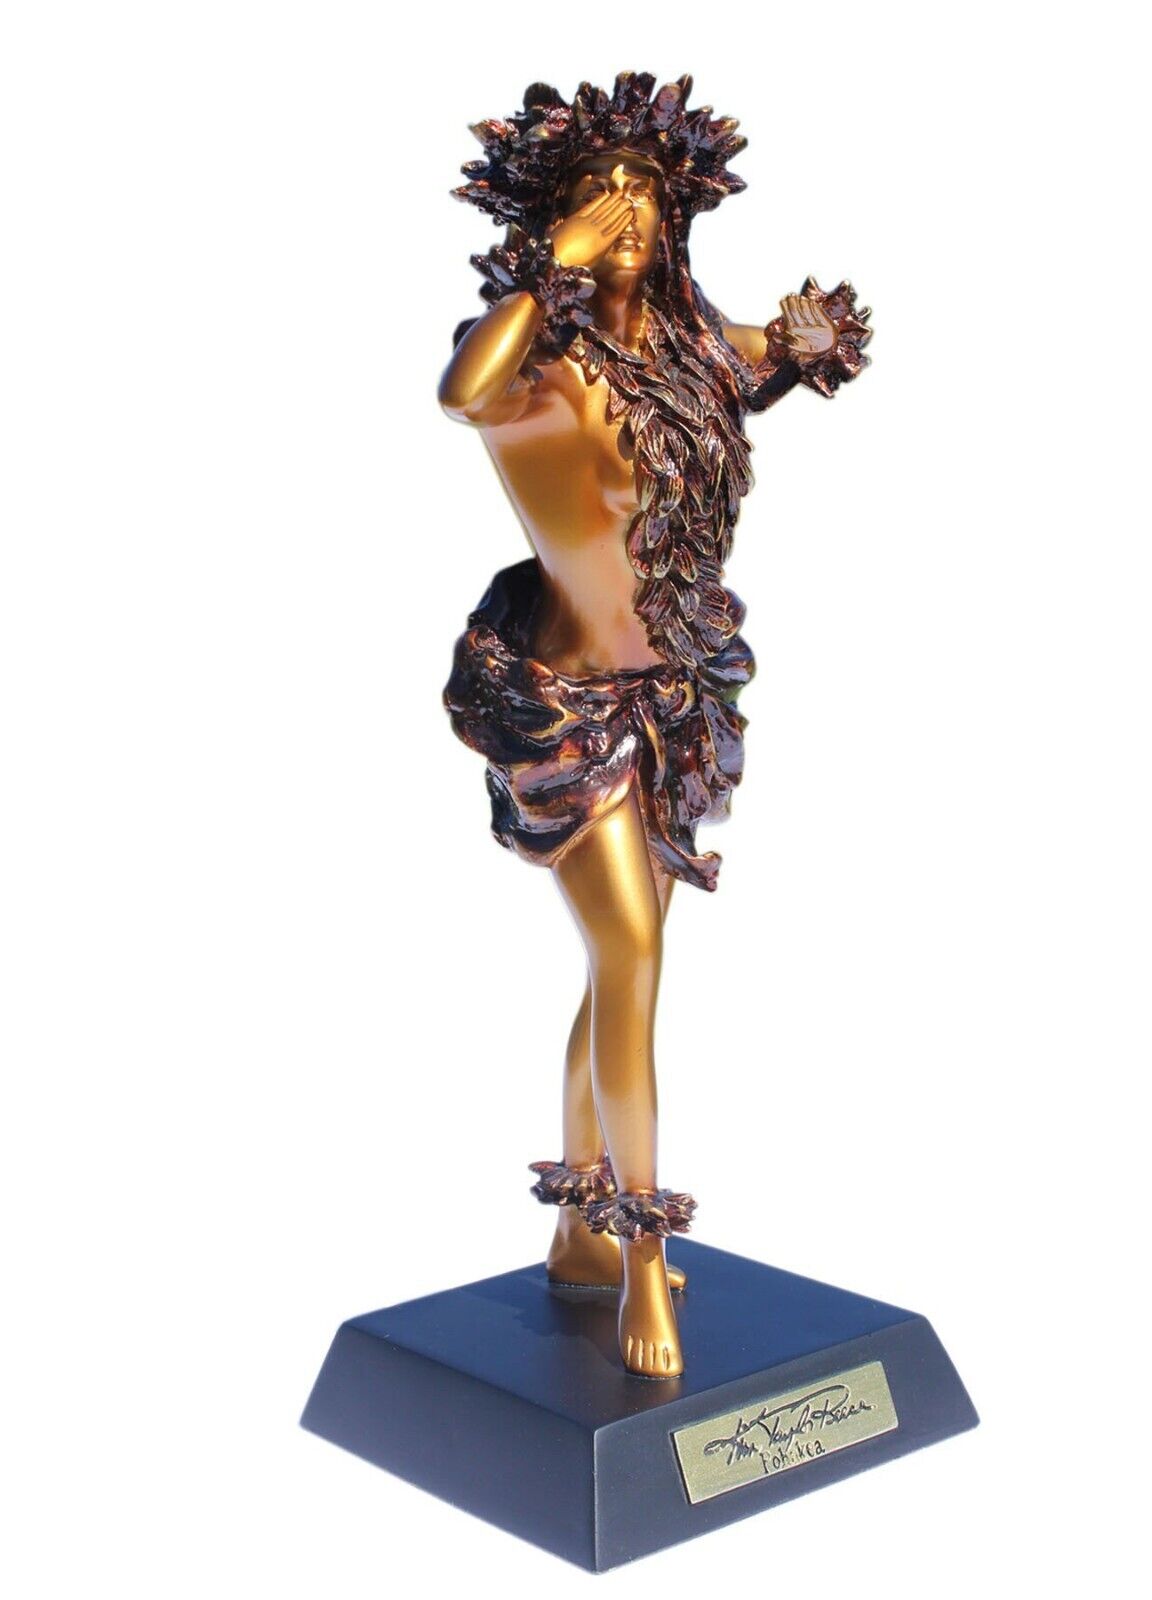 Kim Taylor Reece Cold Cast Resin Statue Pohakea “Dawn’s Light”